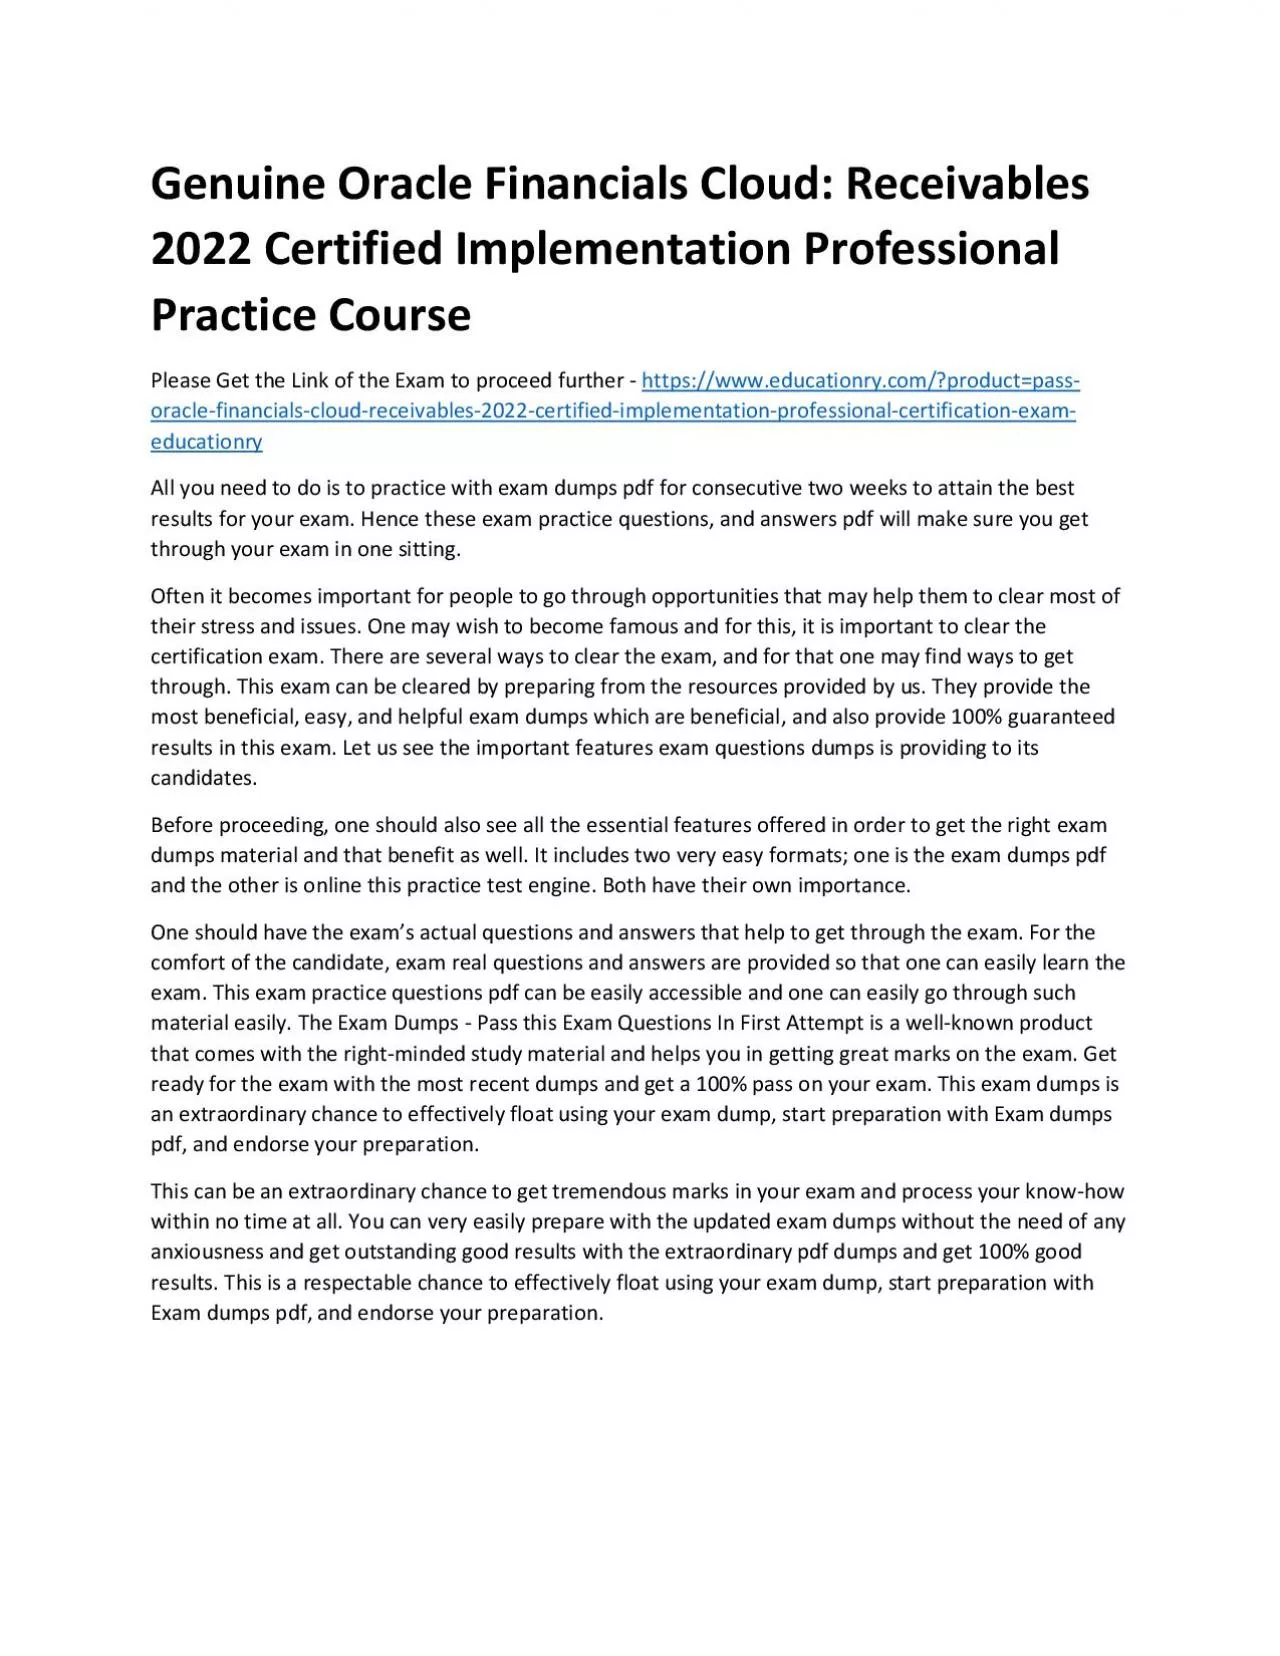 Oracle Financials Cloud: Receivables 2022 Certified Implementation Professional